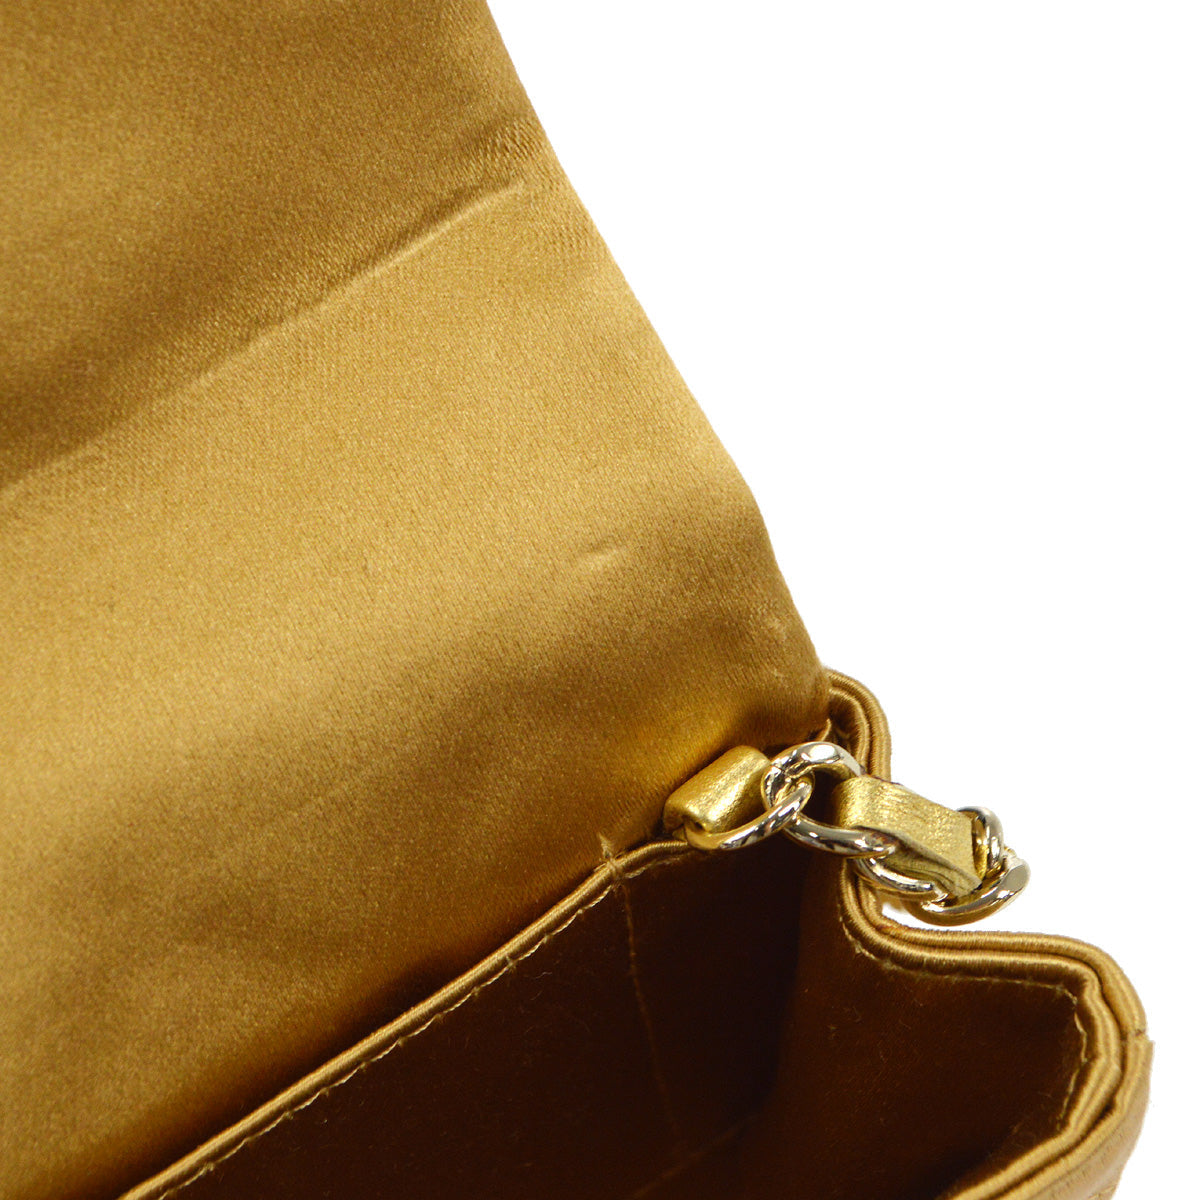 Chanel 2006-2008 Evening Bag Gold Satin